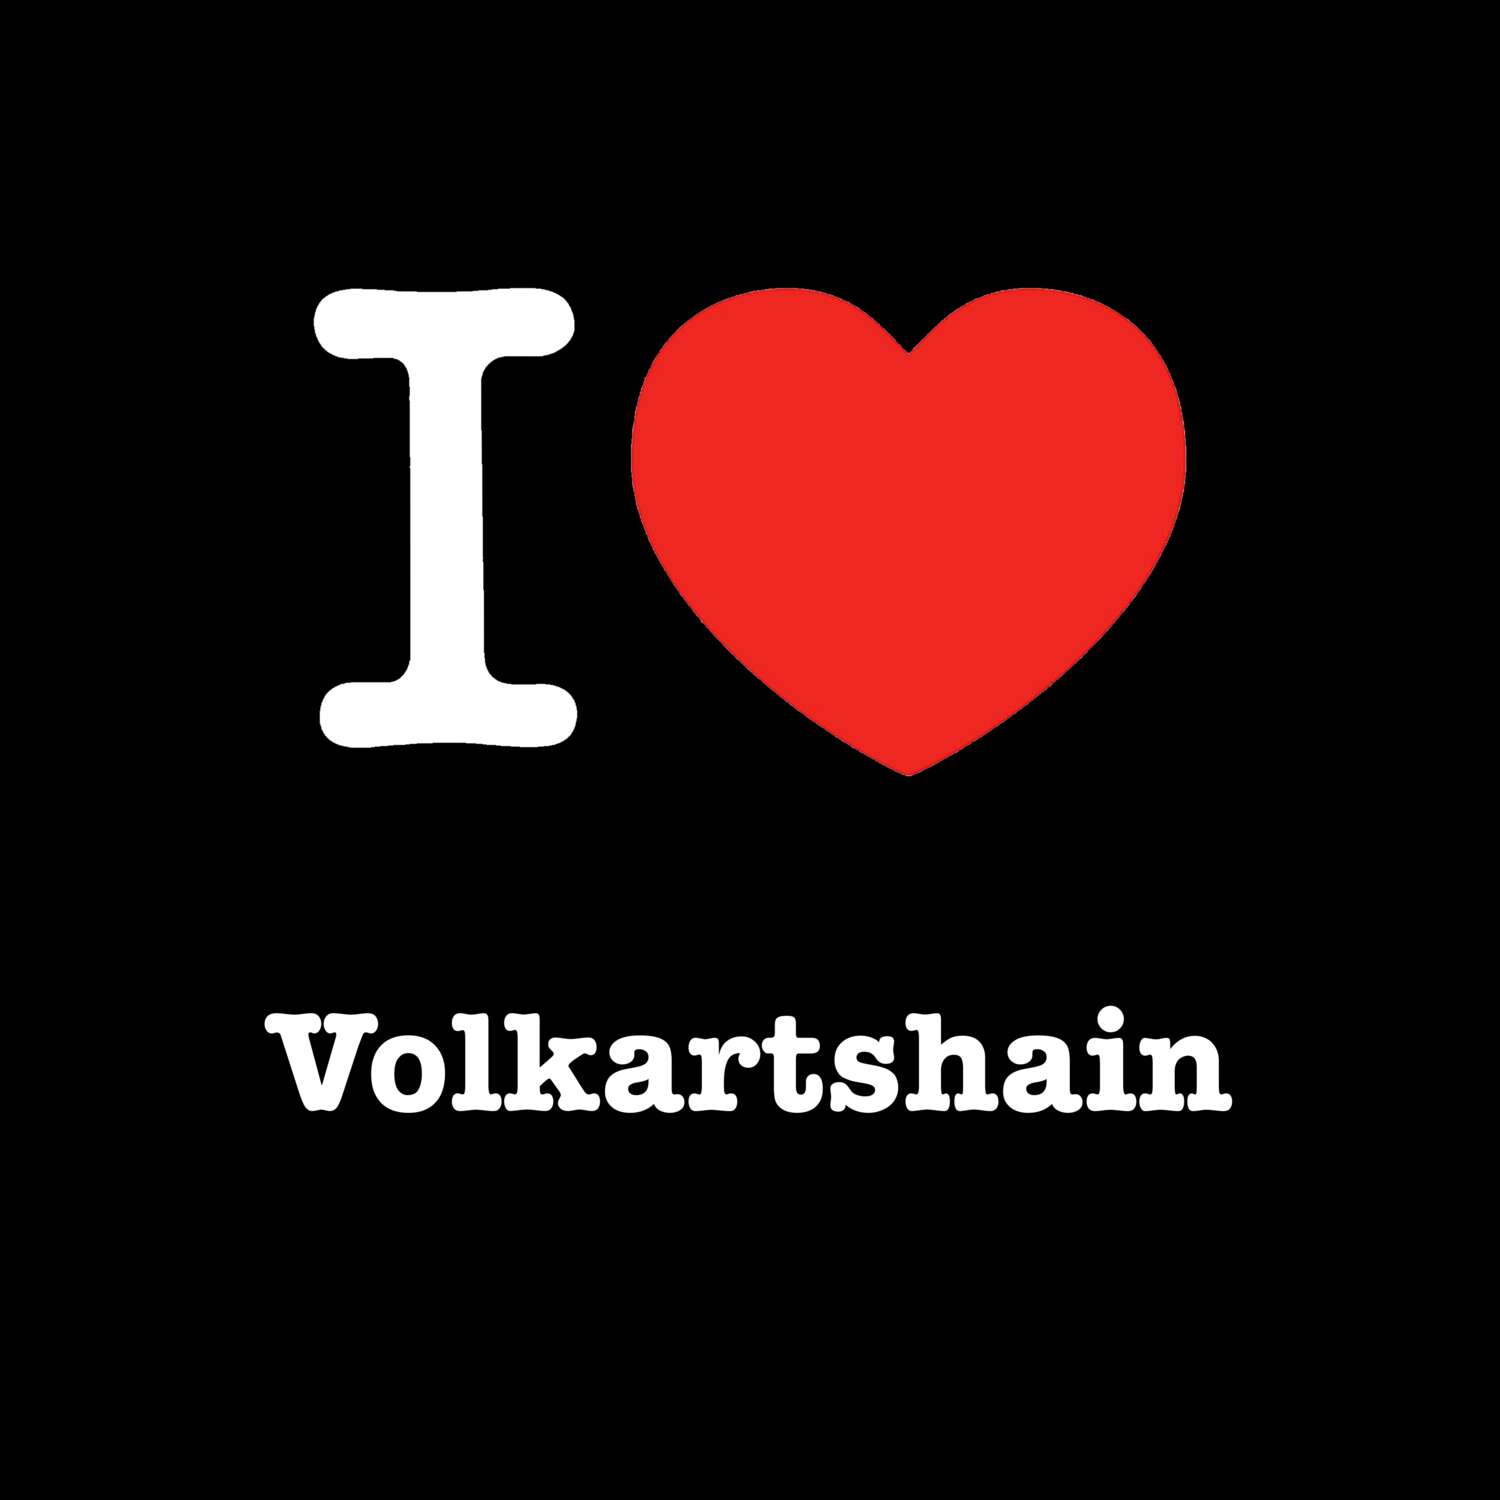 Volkartshain T-Shirt »I love«